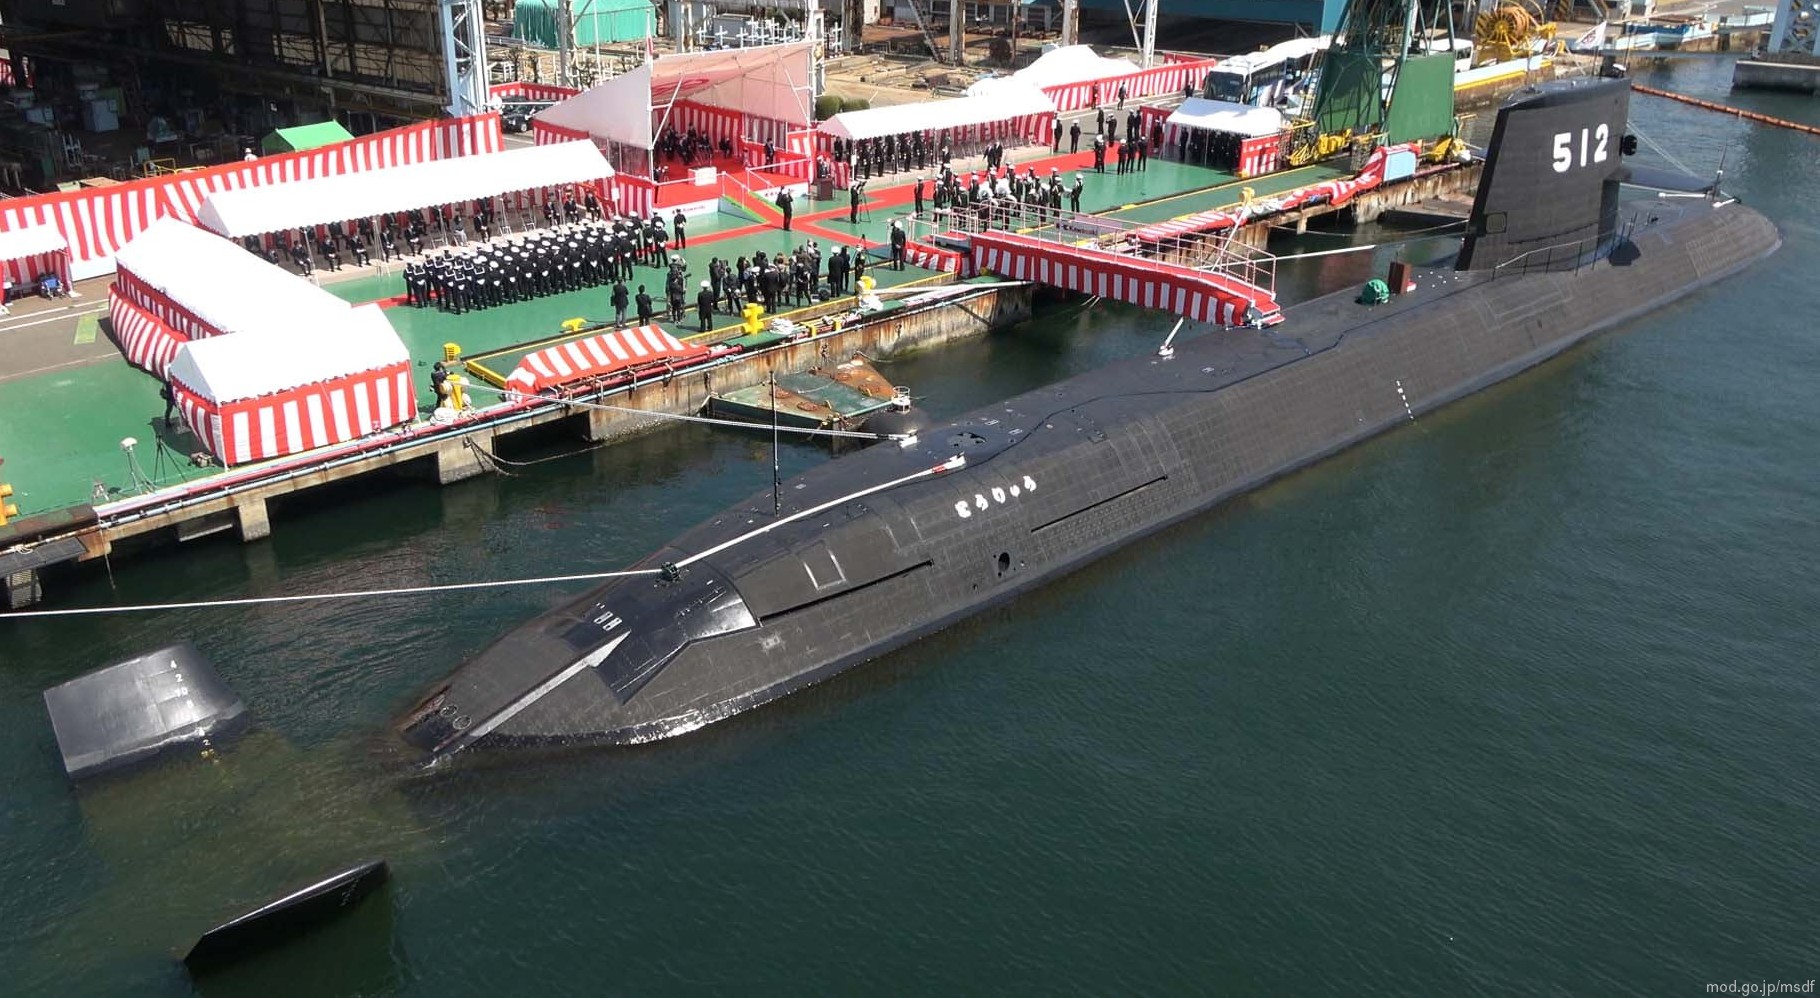 ss-512 js toryu 16ss soryu class attack submarine ssk japan maritime self defense force jmsdf 06